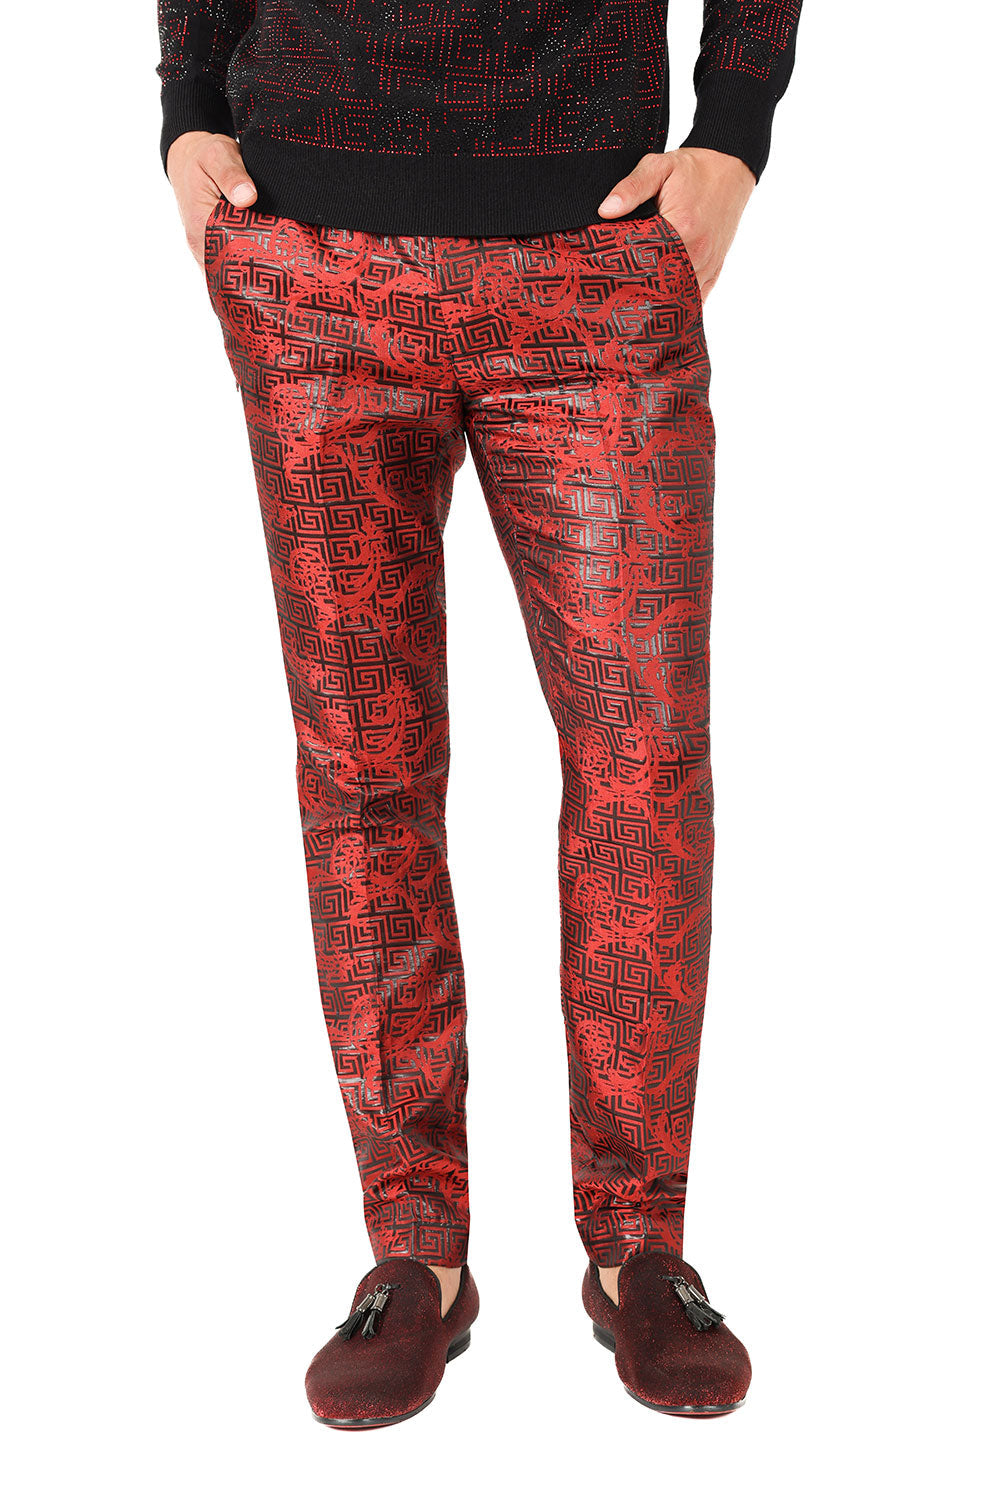 Barabas Men's Shiny Greek Fret Prints Design Chino Pants 2CP3102 Red Black